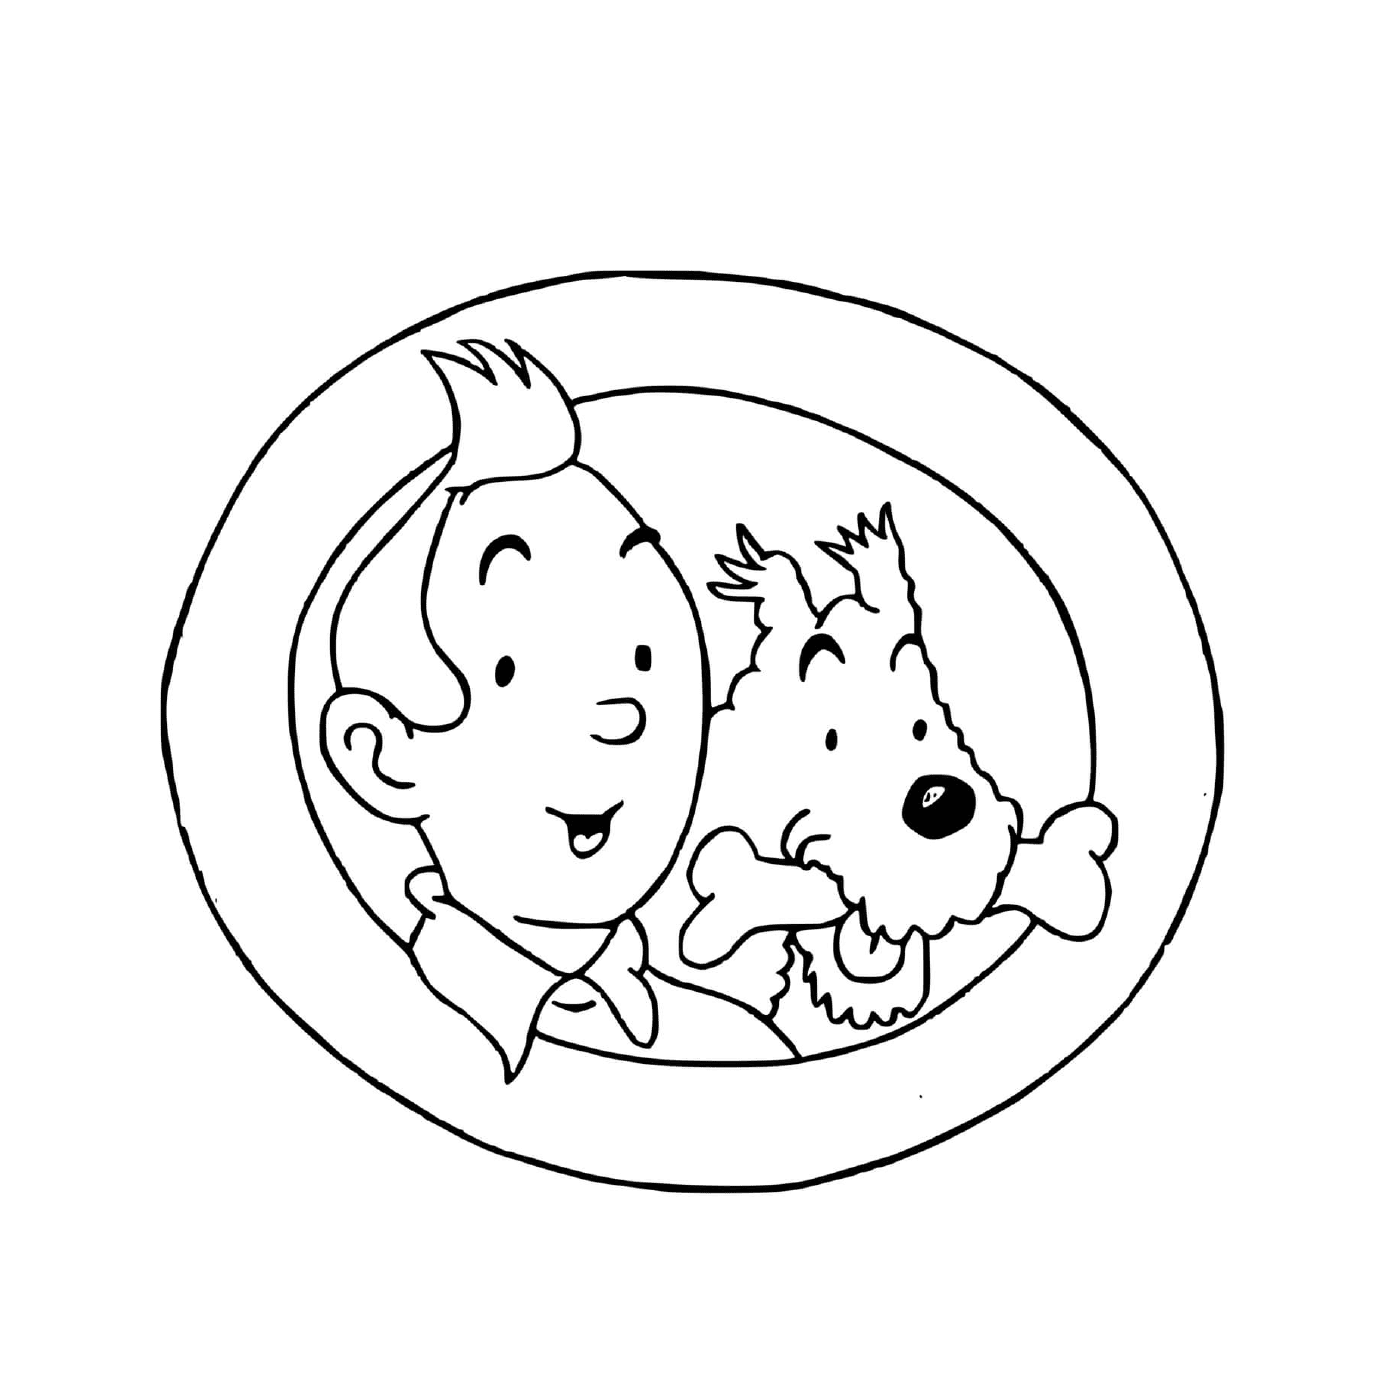  Tintin and Milou at the window 